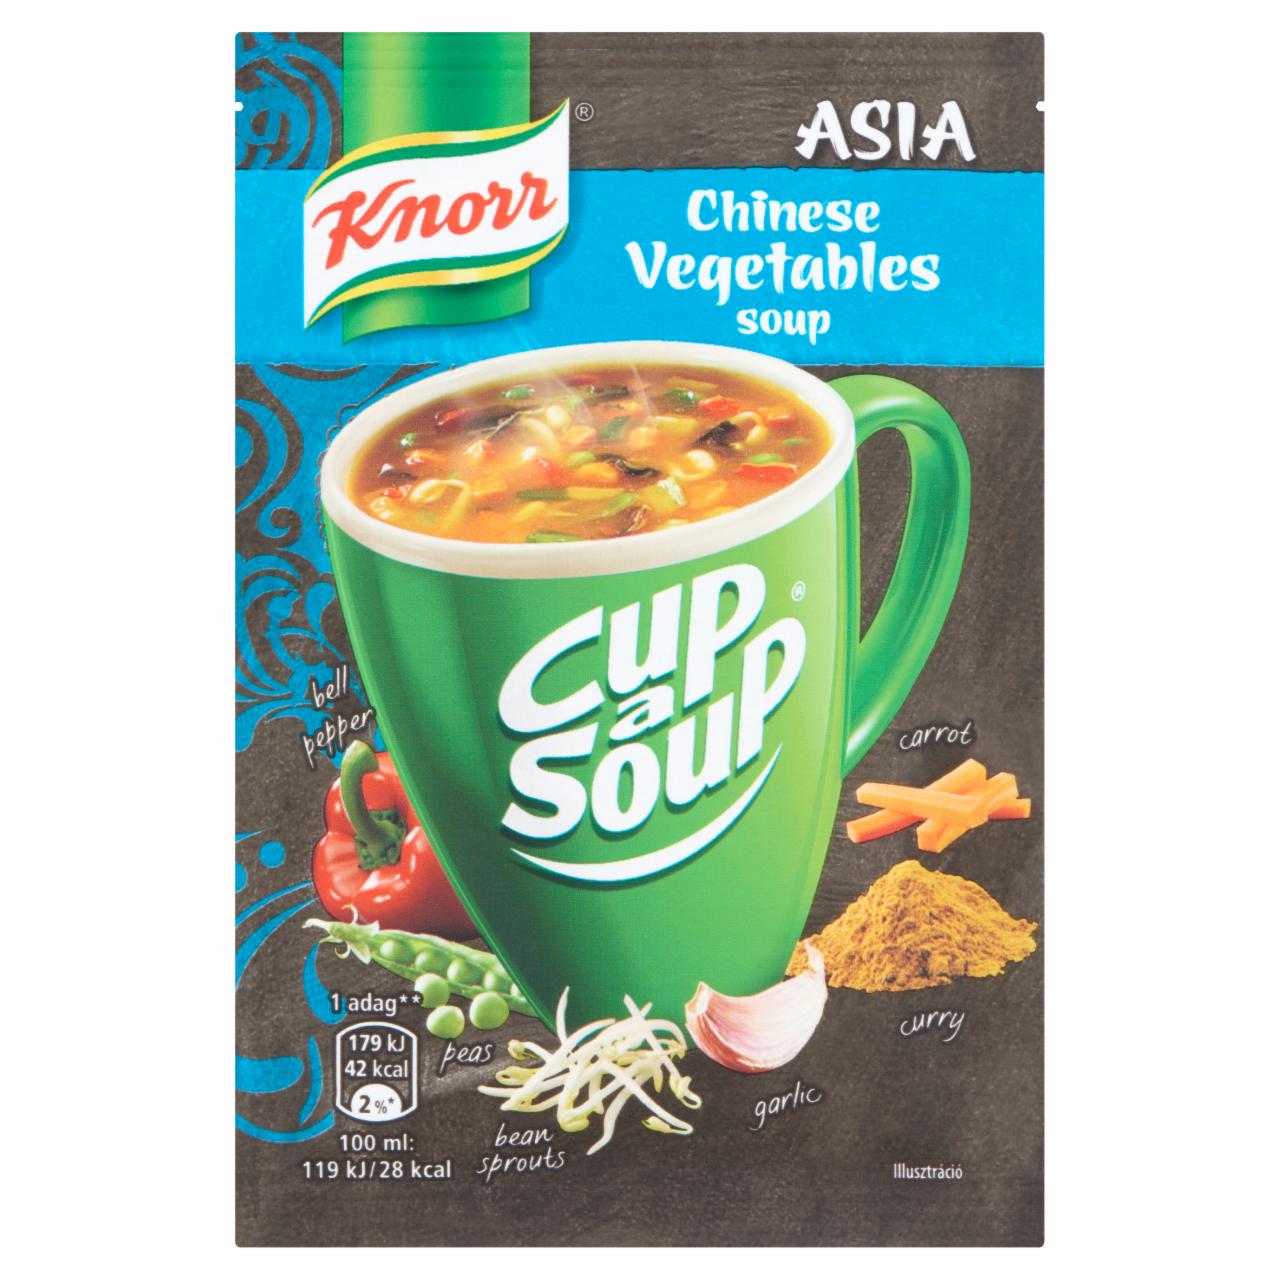 Képek - Knorr Cup a Soup Asia kínai zöldségleves 13 g